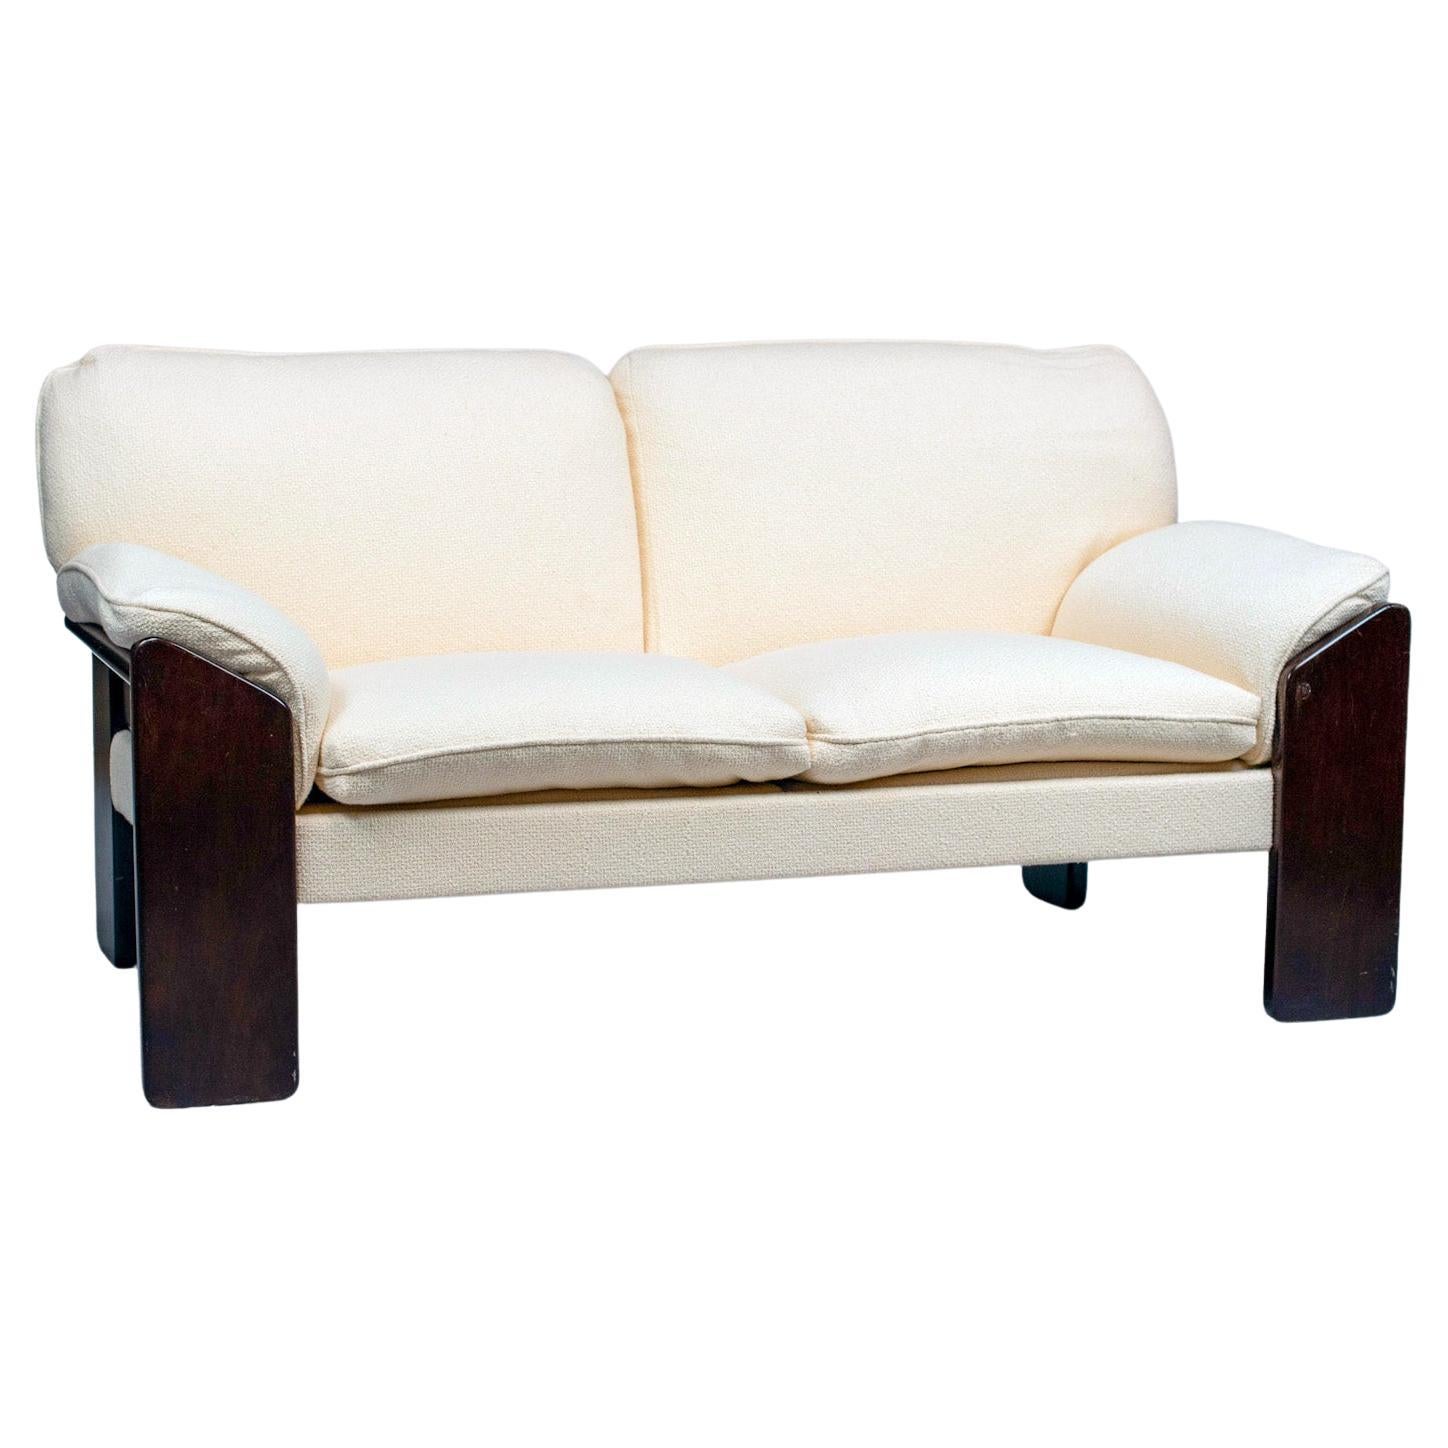 Jean Gillon, 2-seater sofa, c. 1970. Probel Label For Sale